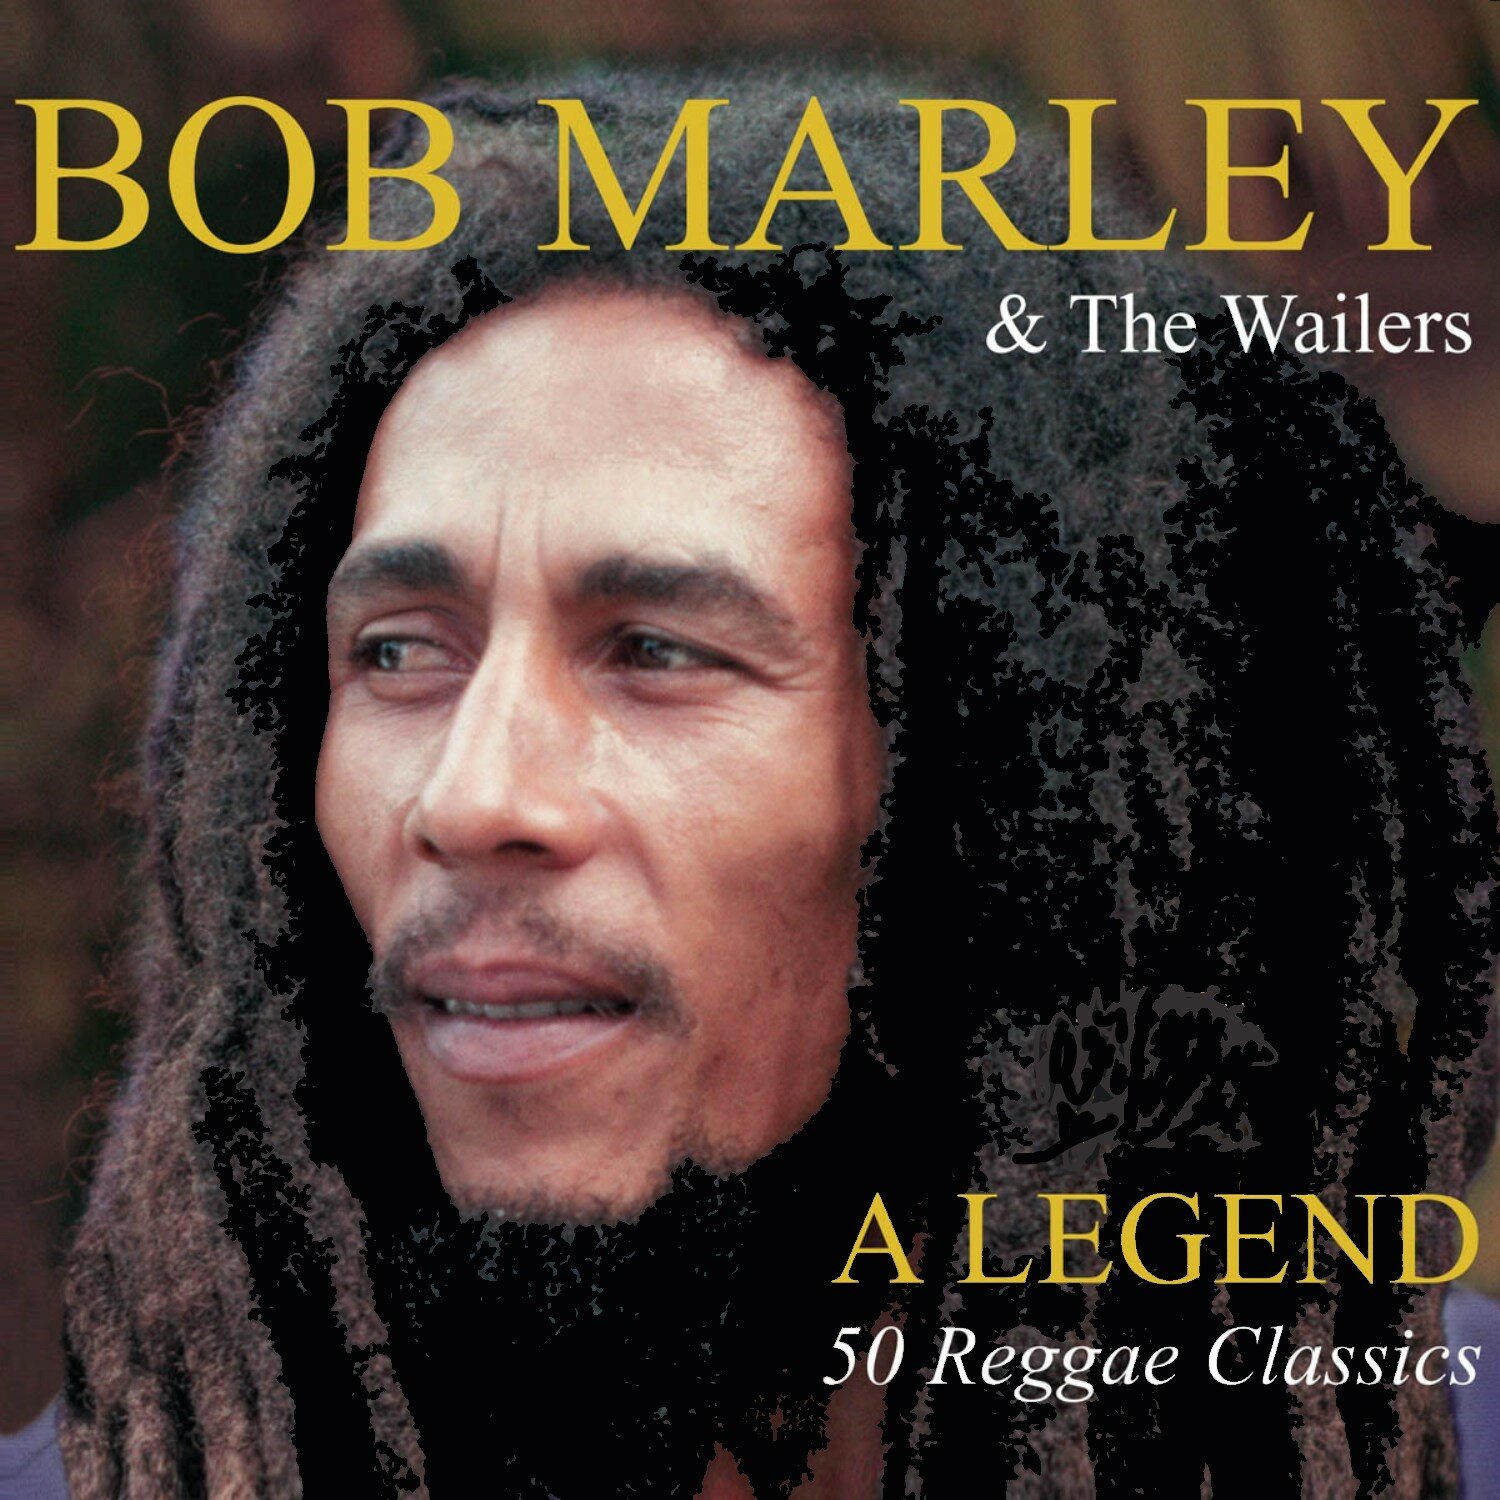 Bob Marley Featuring The Wailers A Legend 50 Reggae Classics (3CD) NotNowMusic